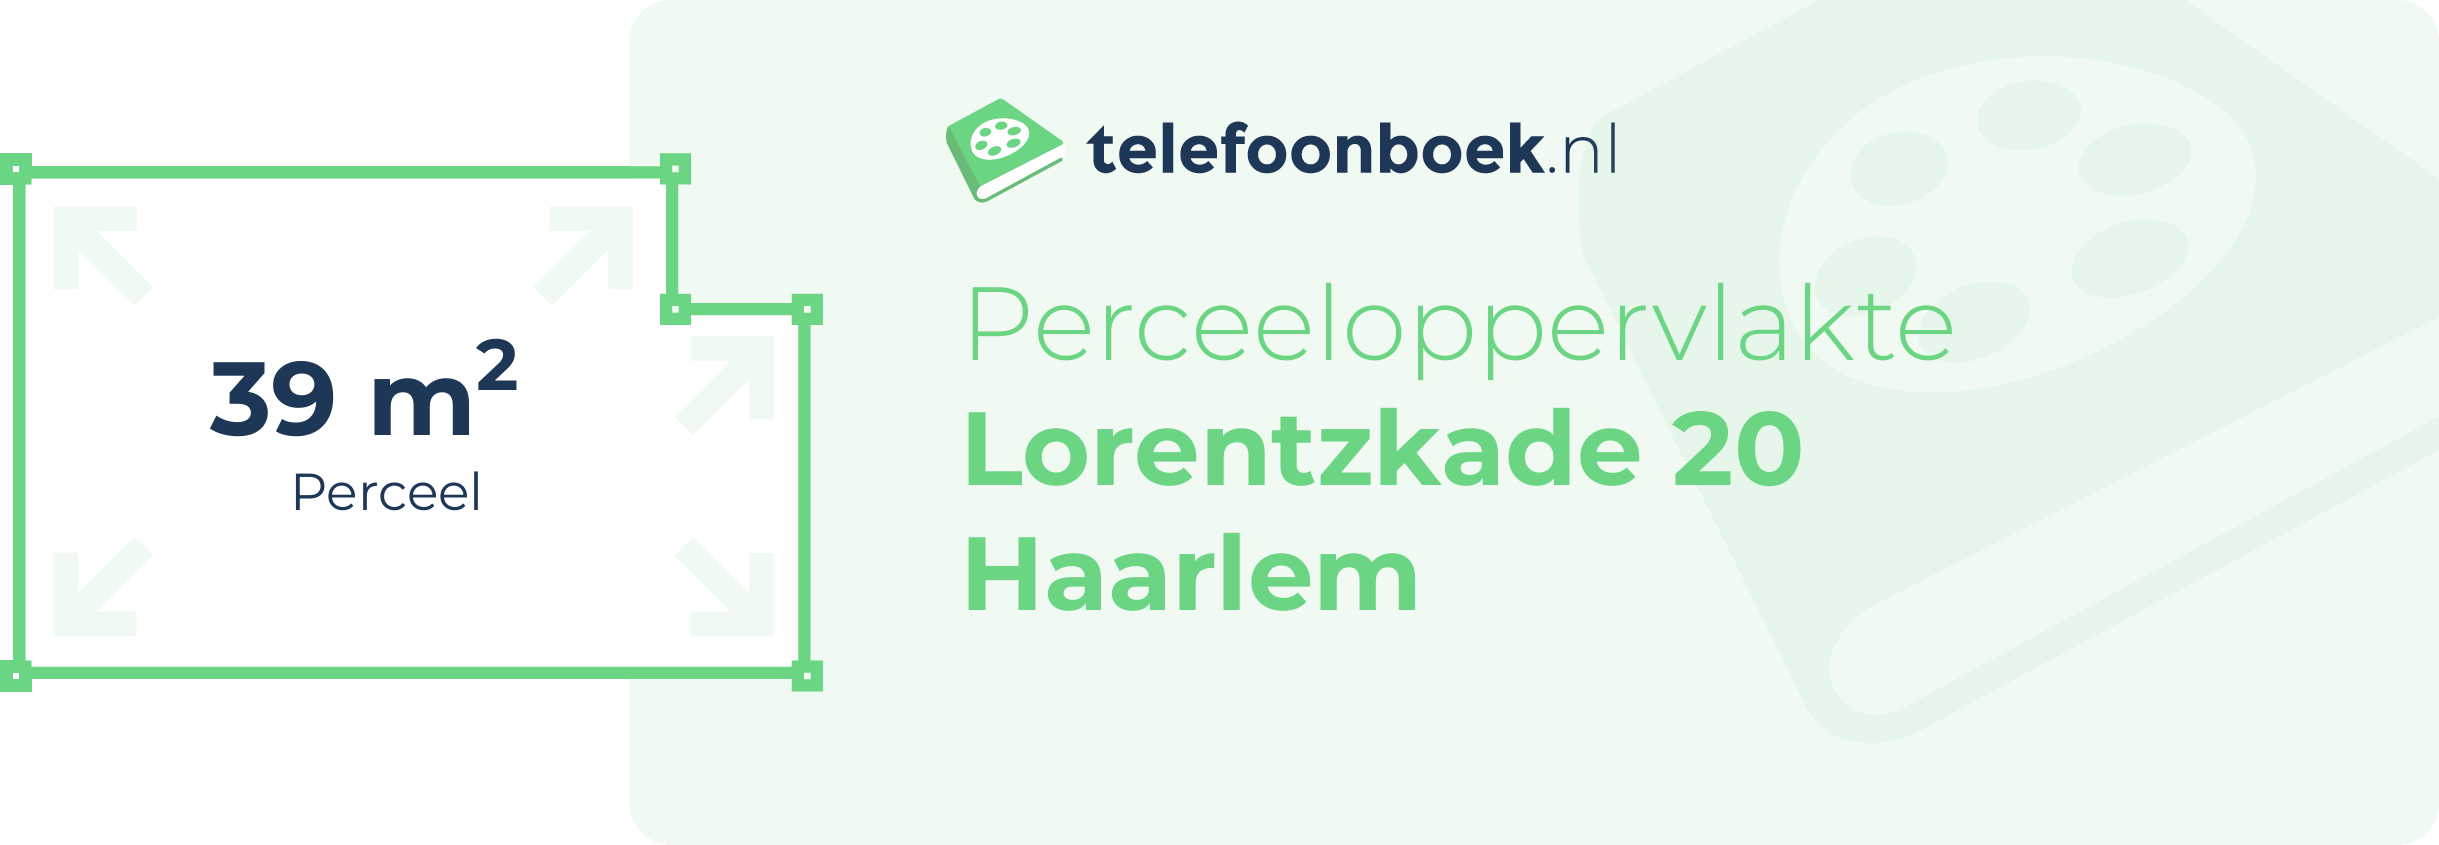 Perceeloppervlakte Lorentzkade 20 Haarlem